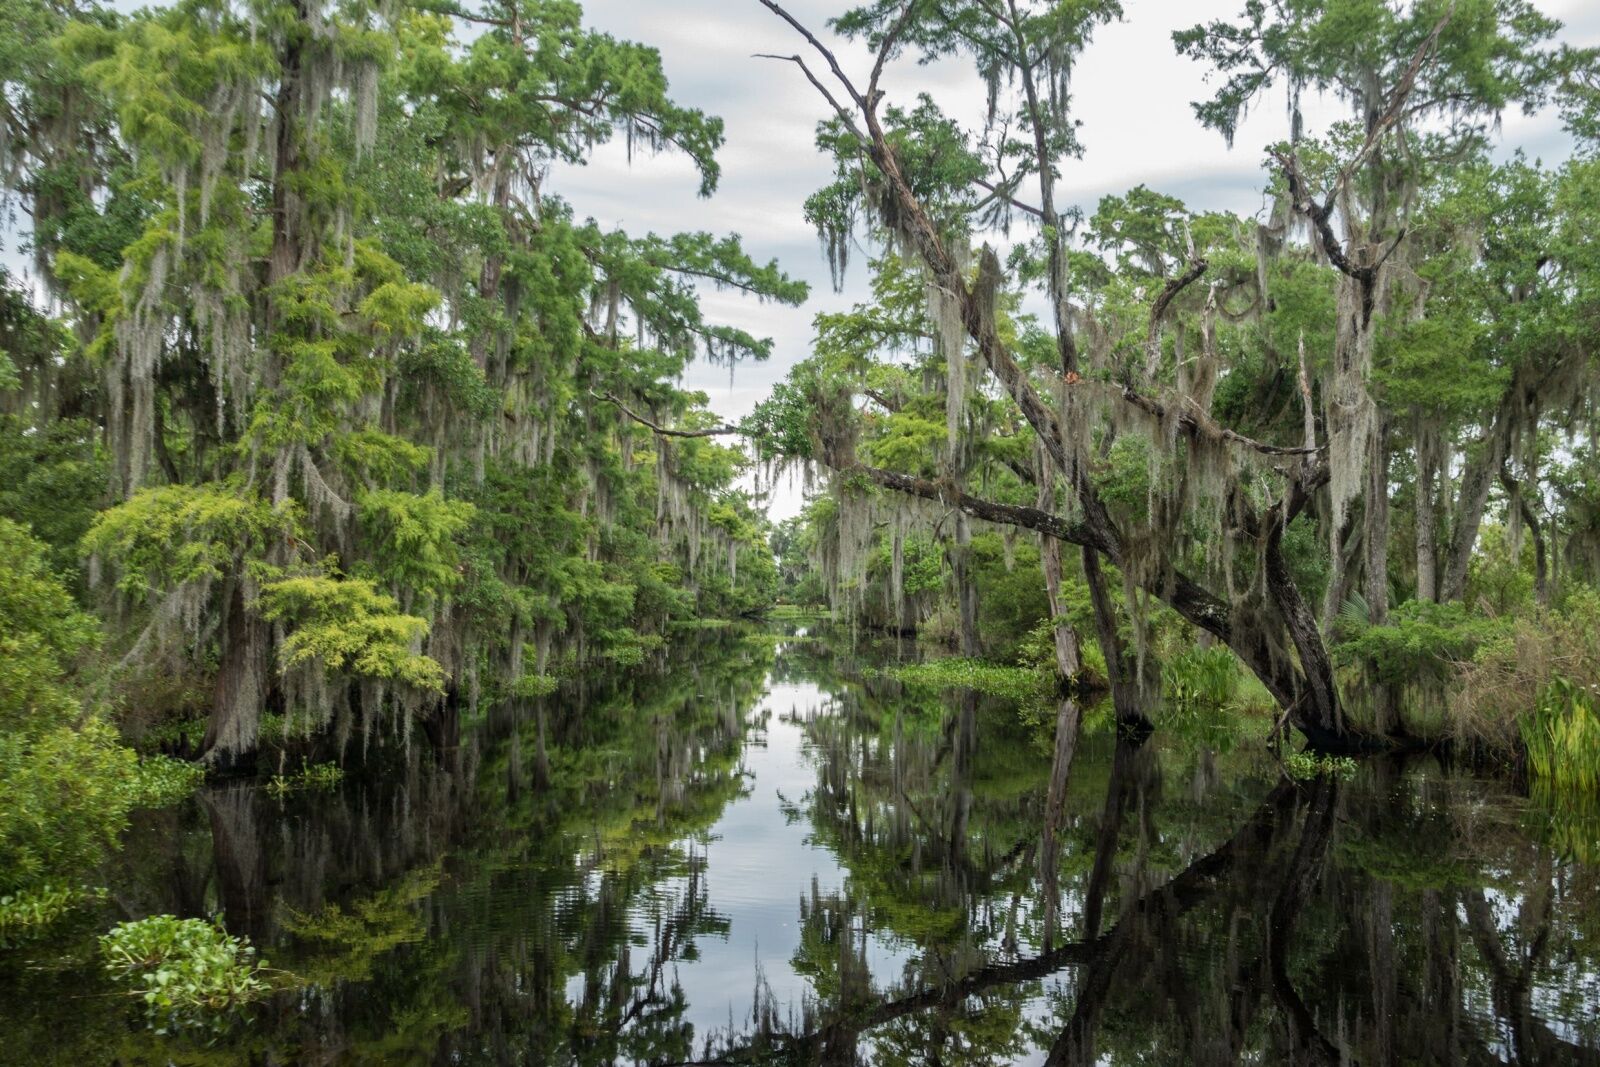 swamp walking - pretty Louisiana swamp